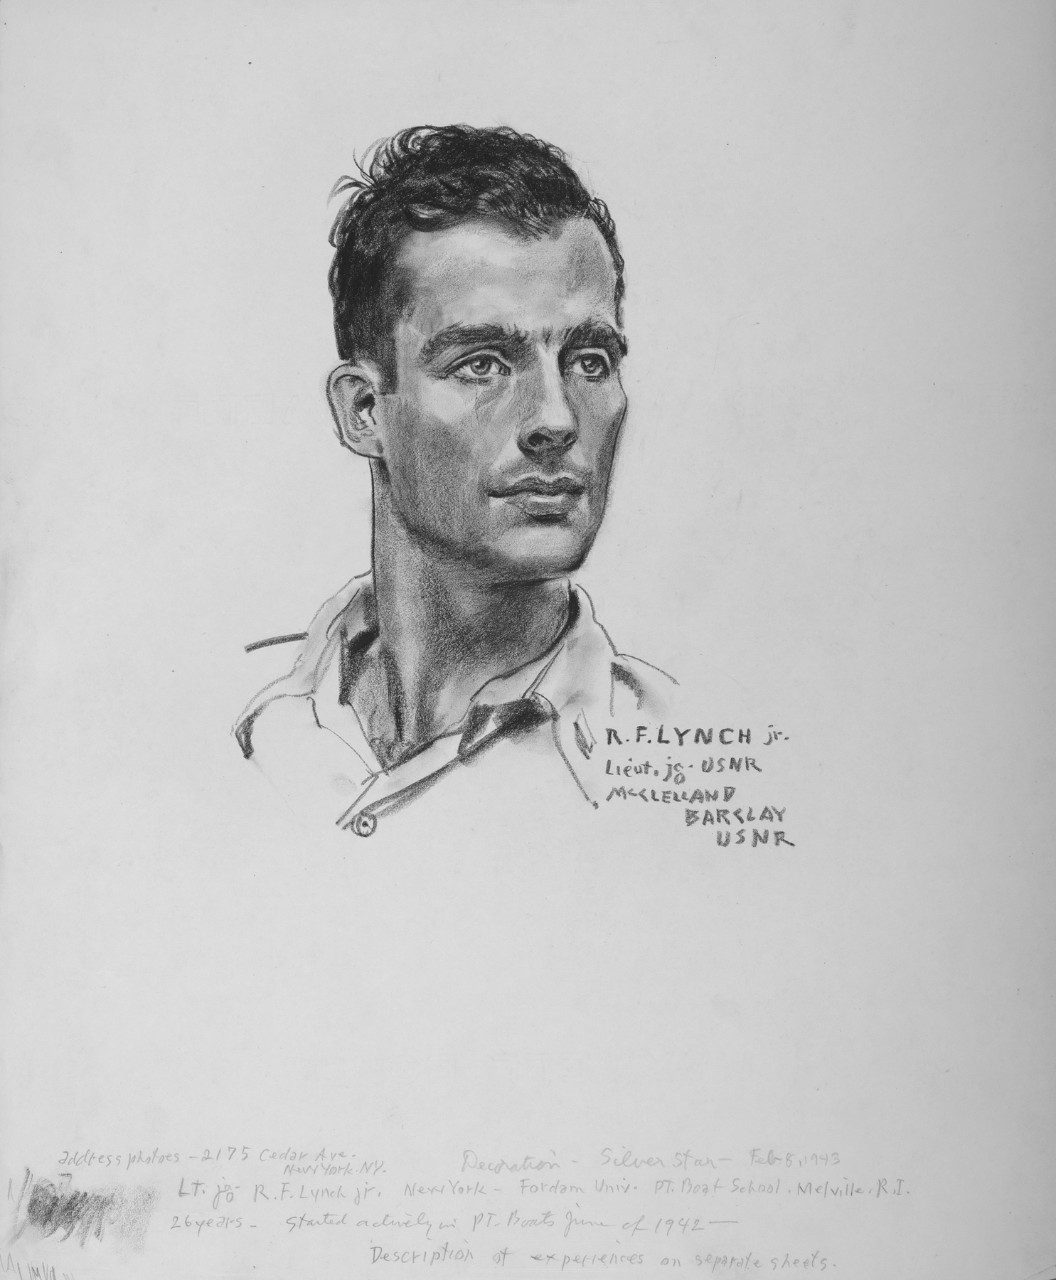 Portrait of LT(jg) R.F. Lynch, Jr.